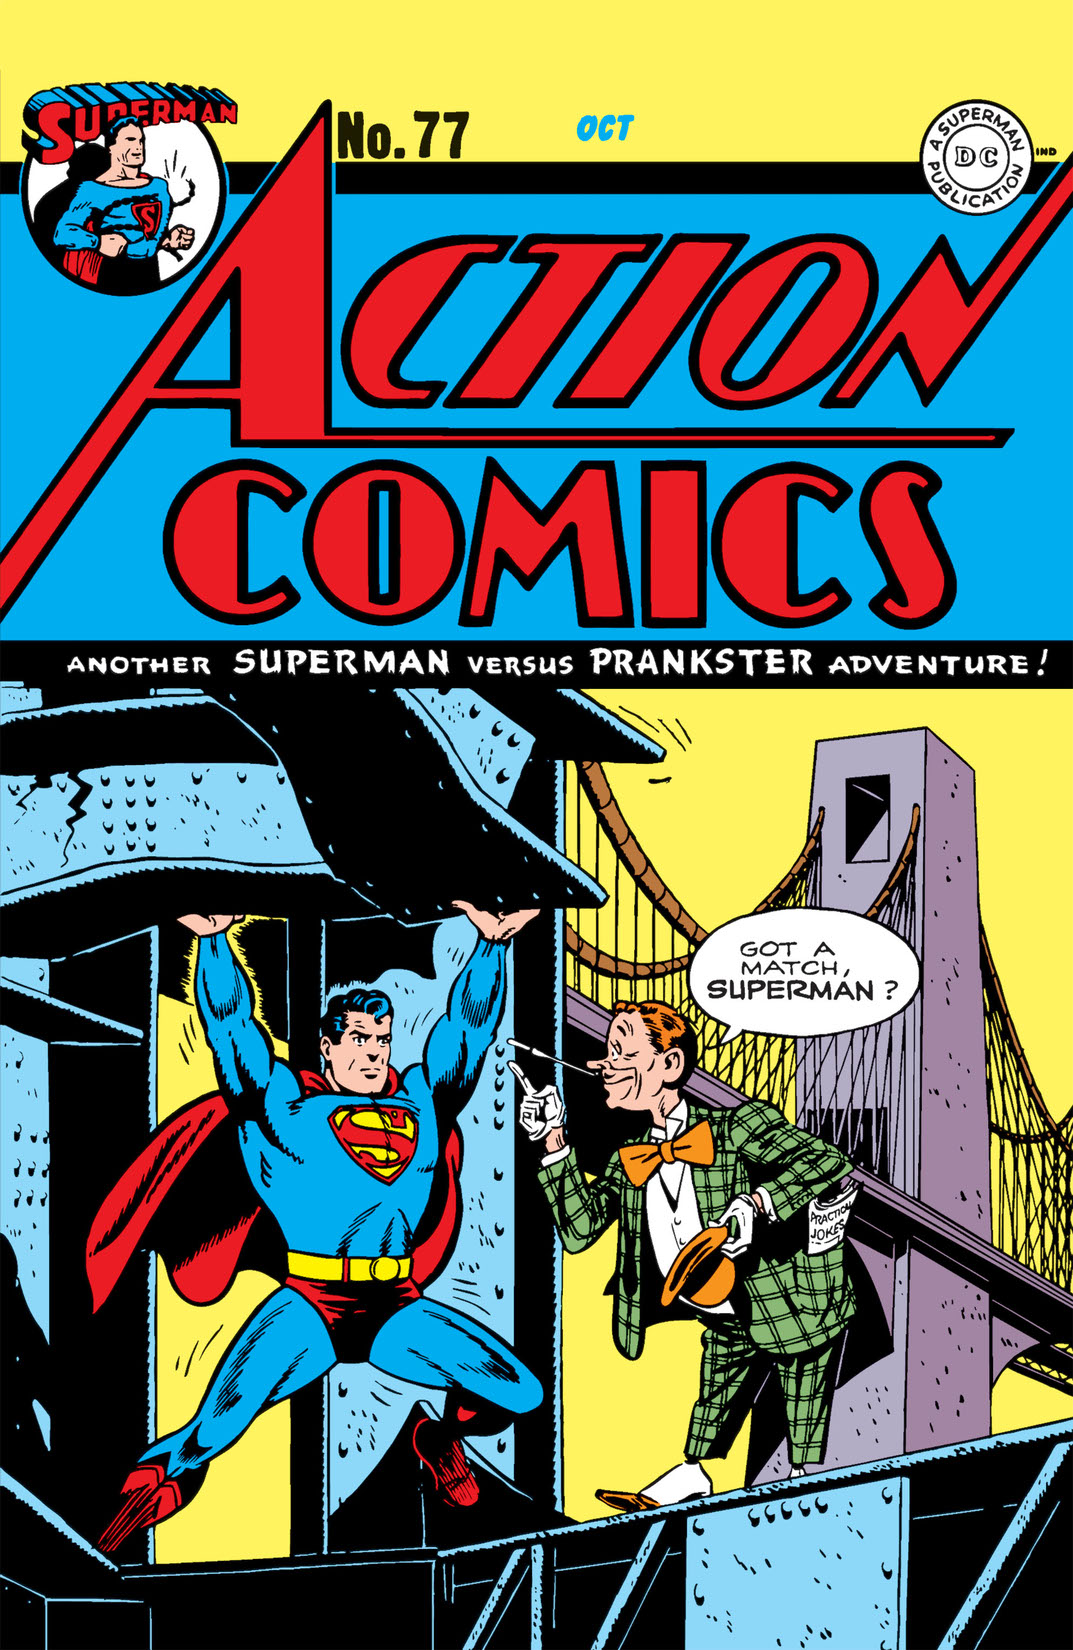 Action Comics (1938-) #77 preview images